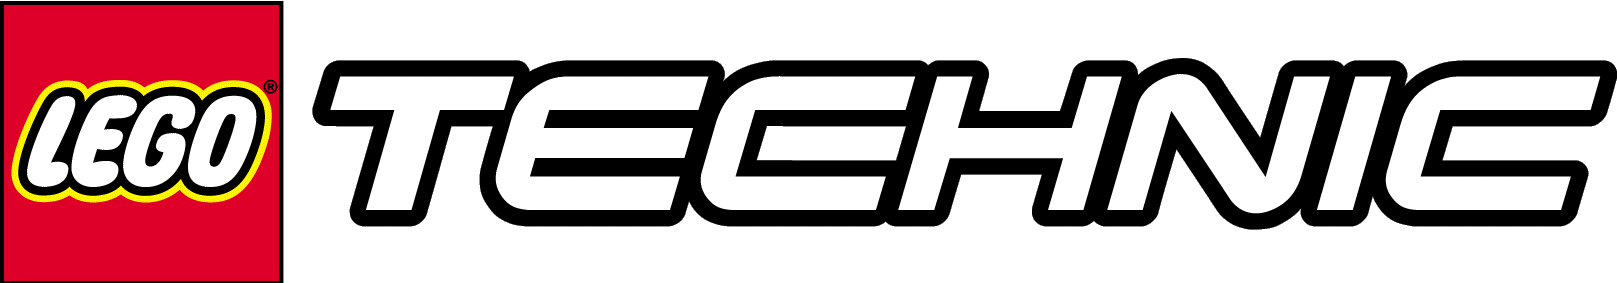 LEGO_TECHNIC_Logo